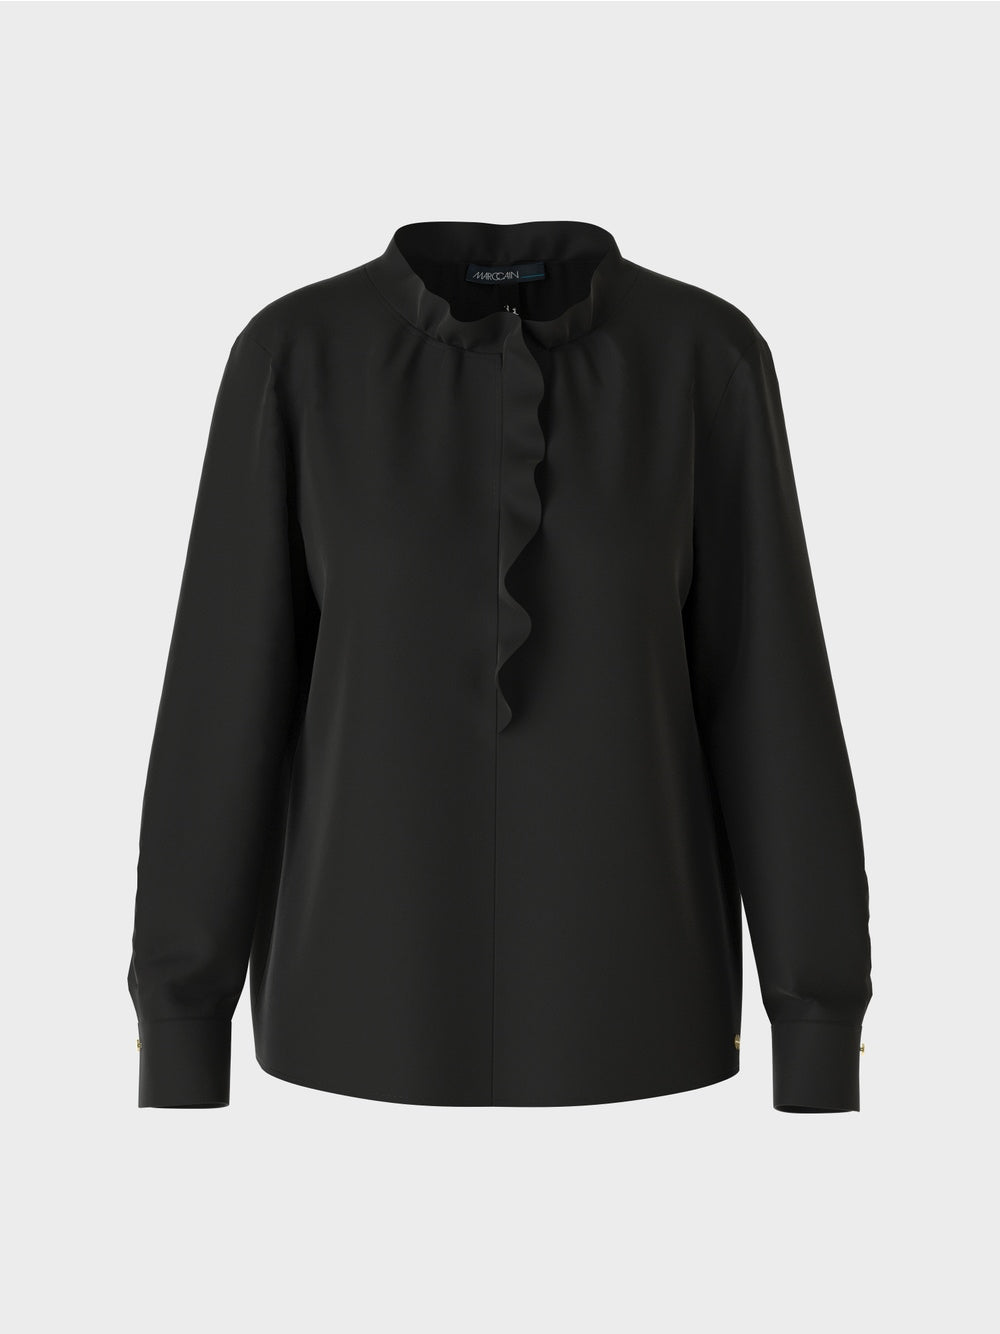 black flowing blouse